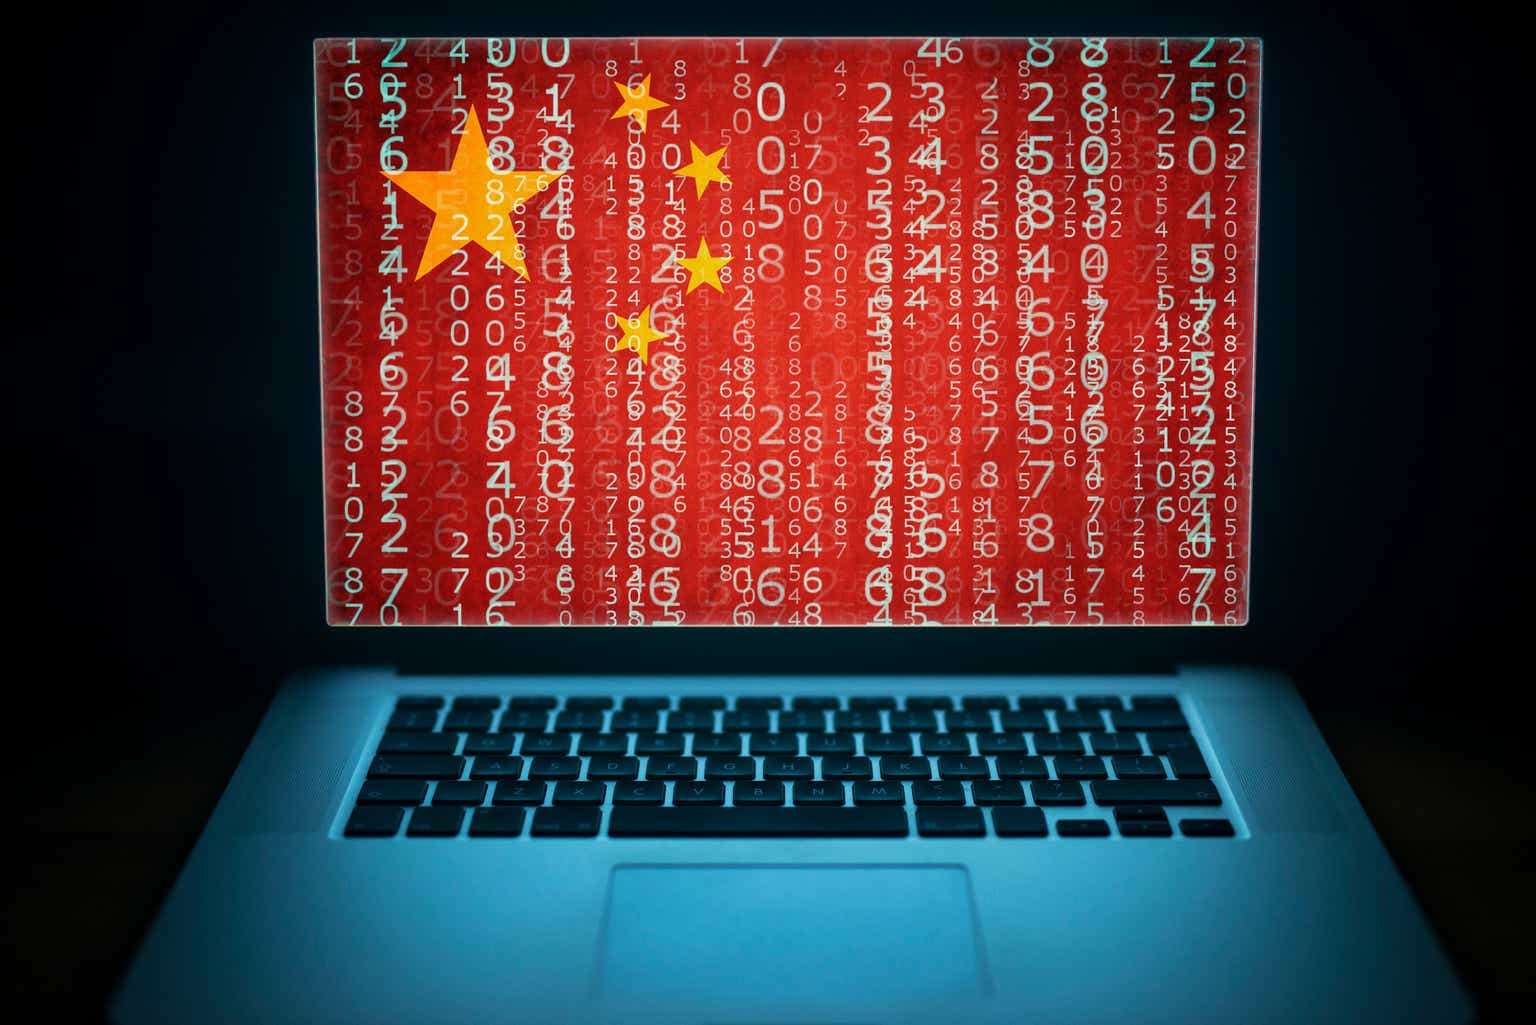 CQQQ: A Play On China’s Tech Laggards